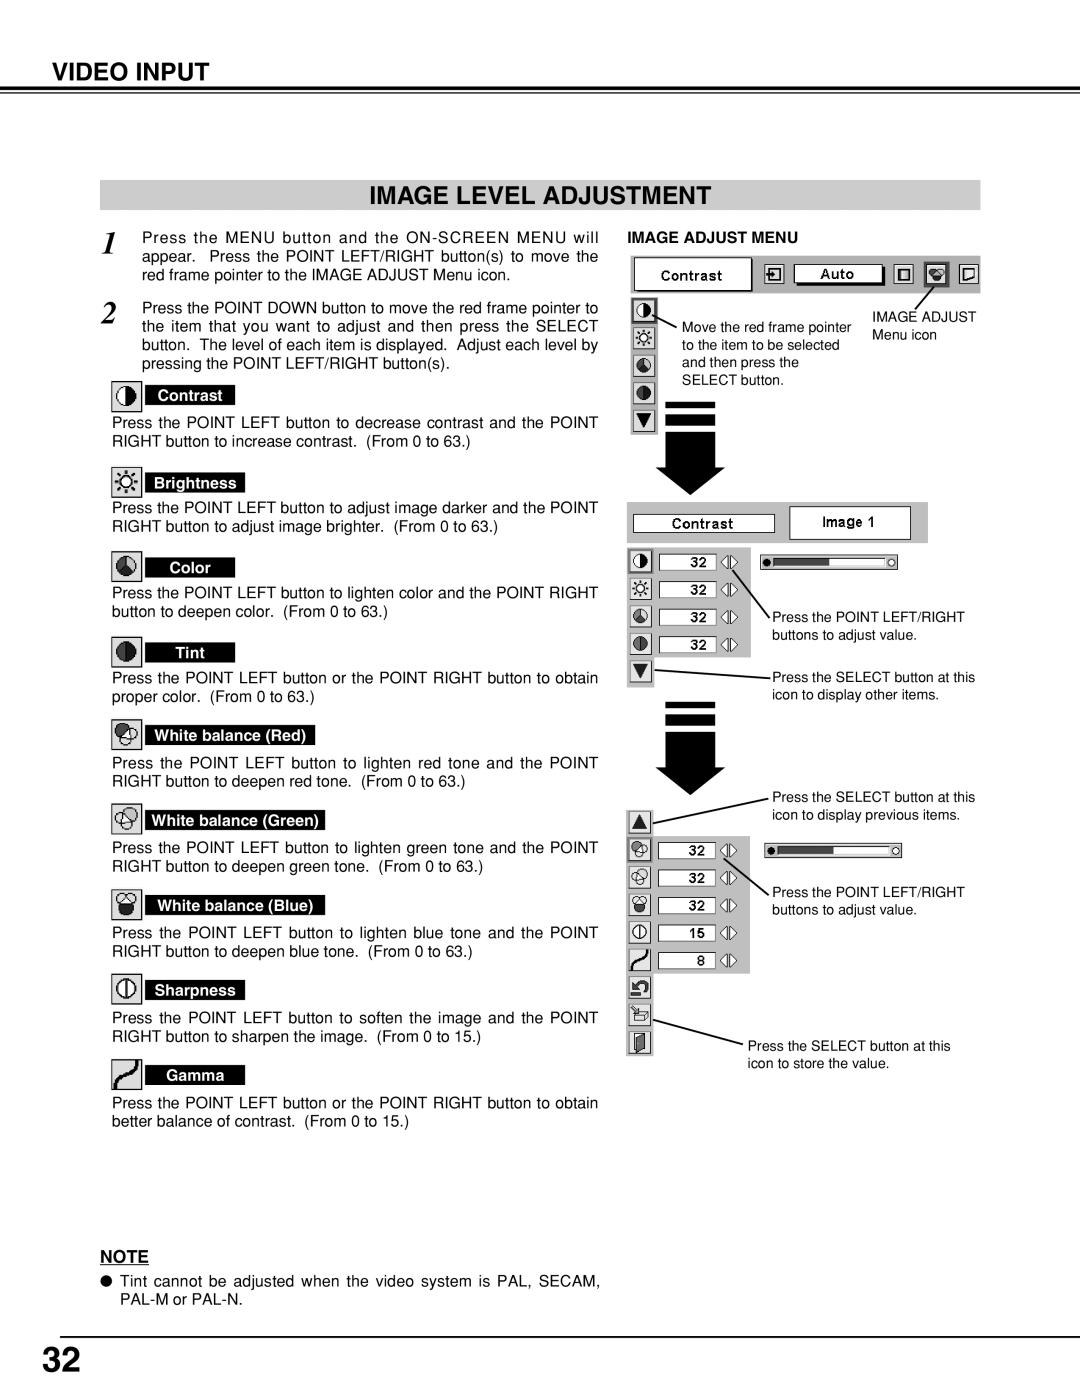 Eiki LC-XNB5M owner manual Video Input Image Level Adjustment, Image Adjust Menu 